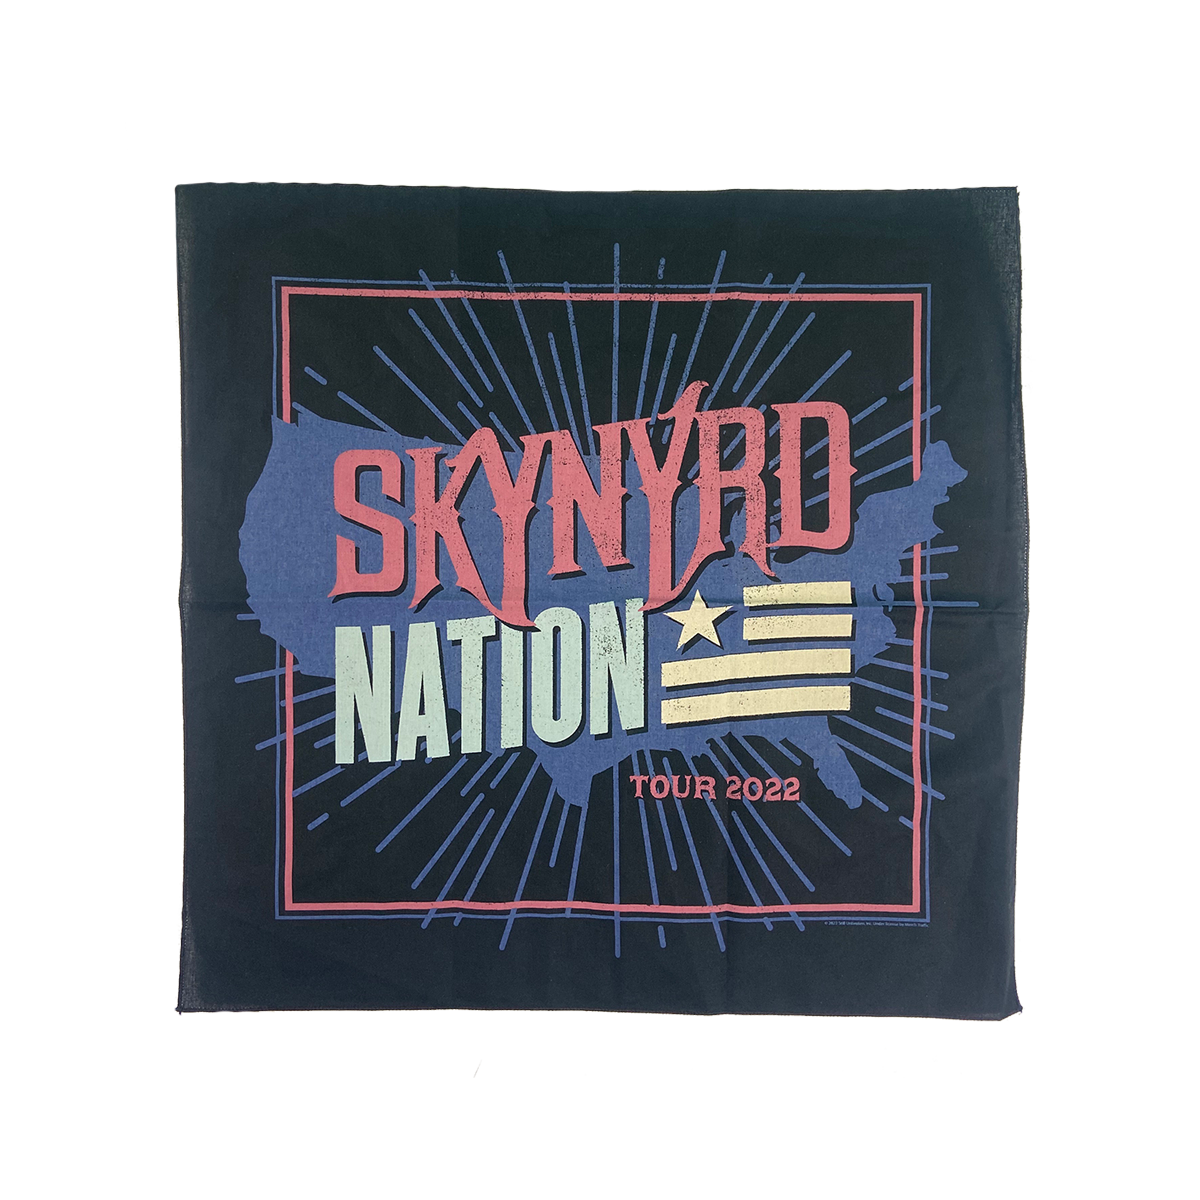 Skynyrd Nation Bandana